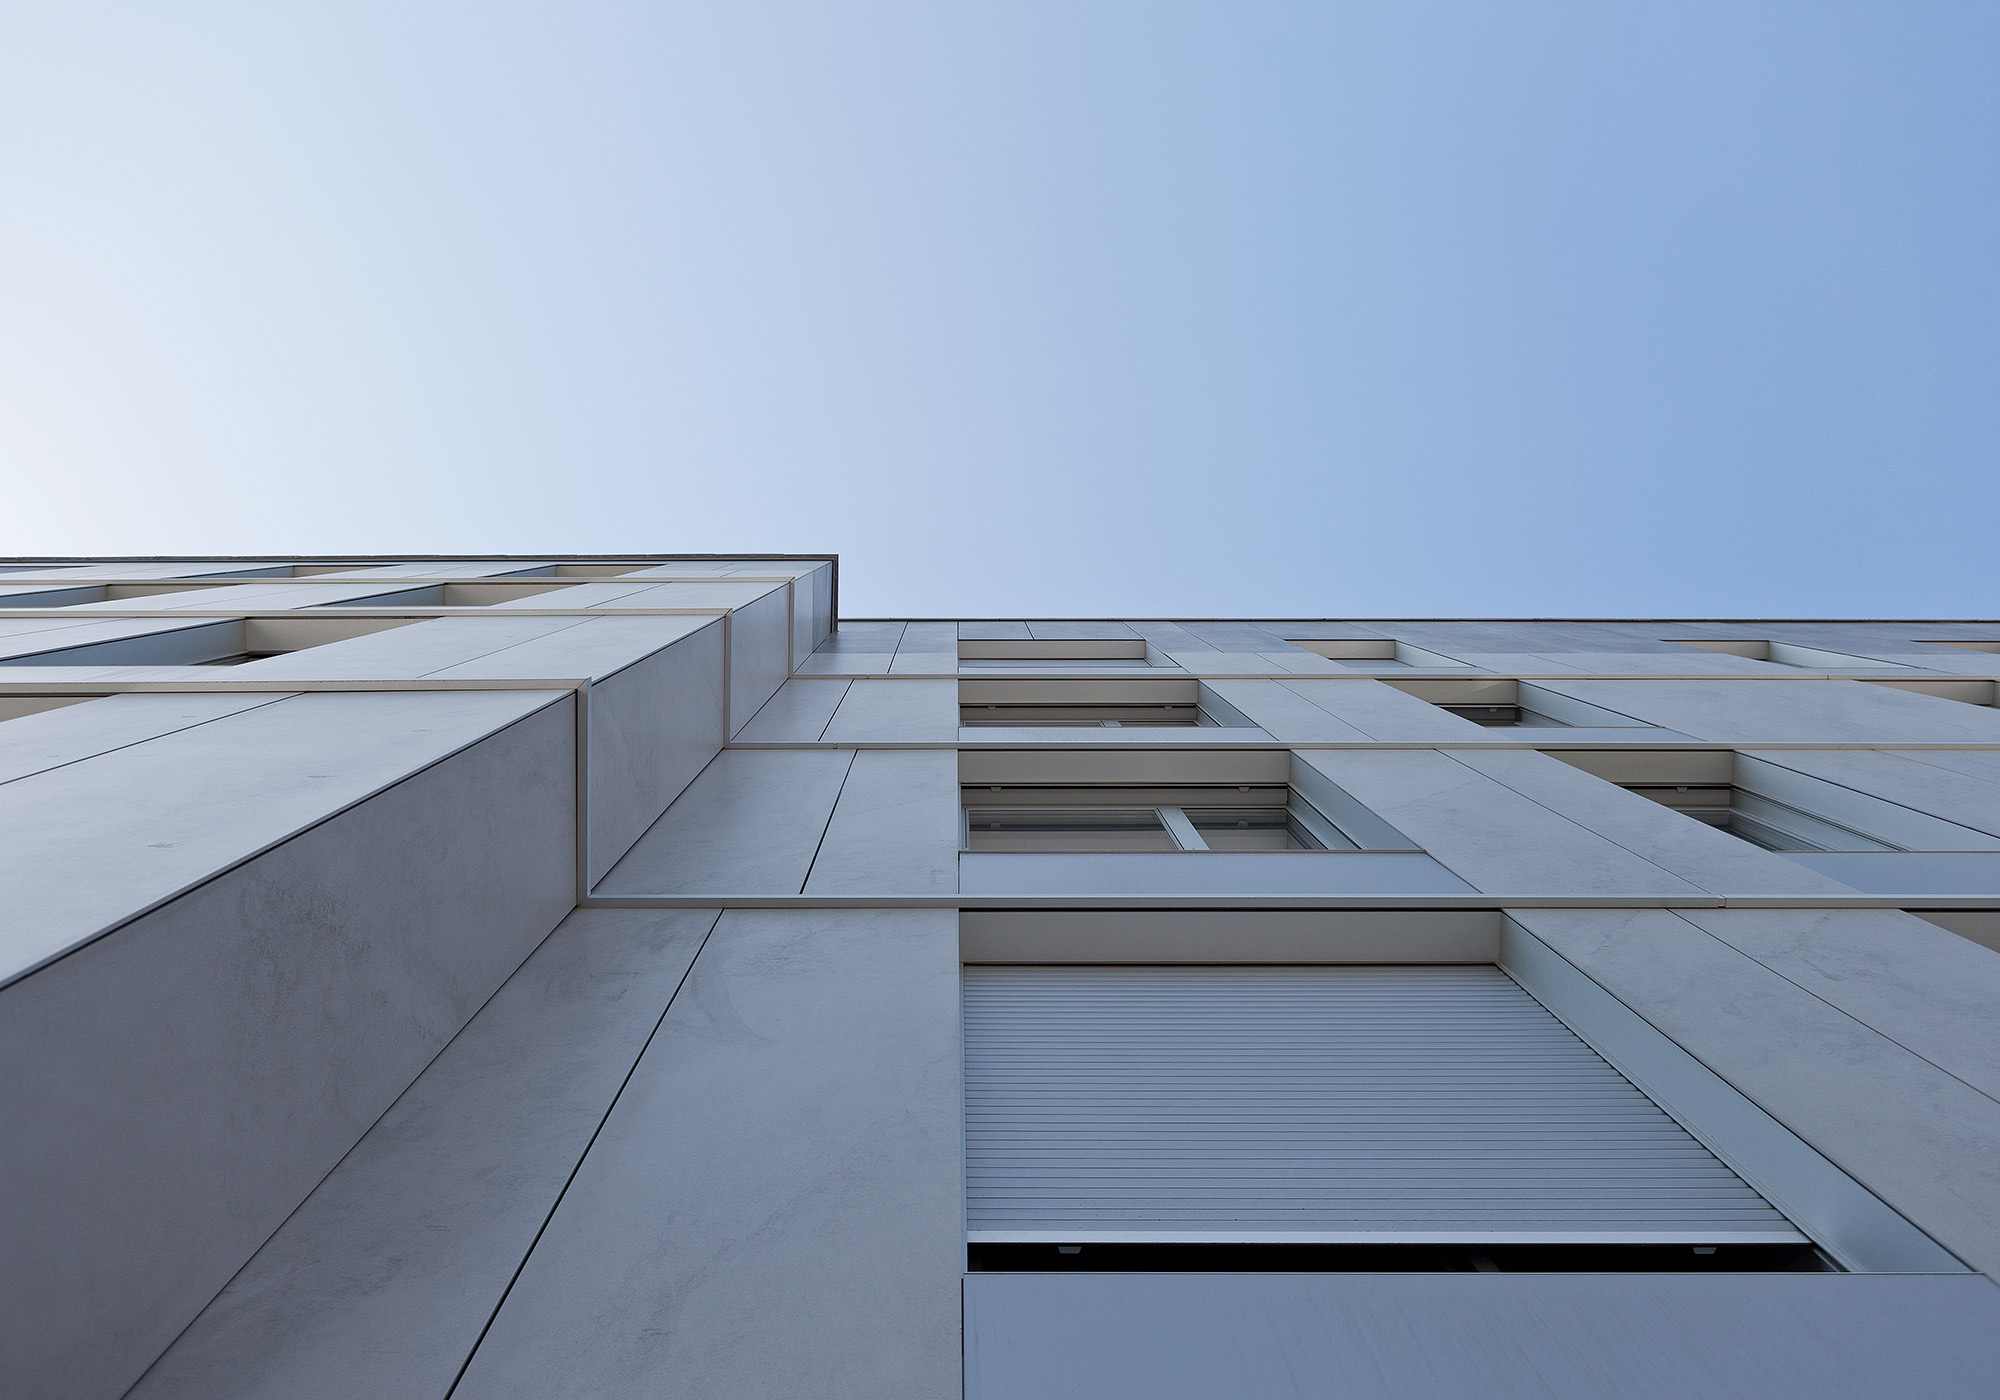 Image of fachada albericia santander dekton 23 in Compact style for a subsidised housing building  - Cosentino